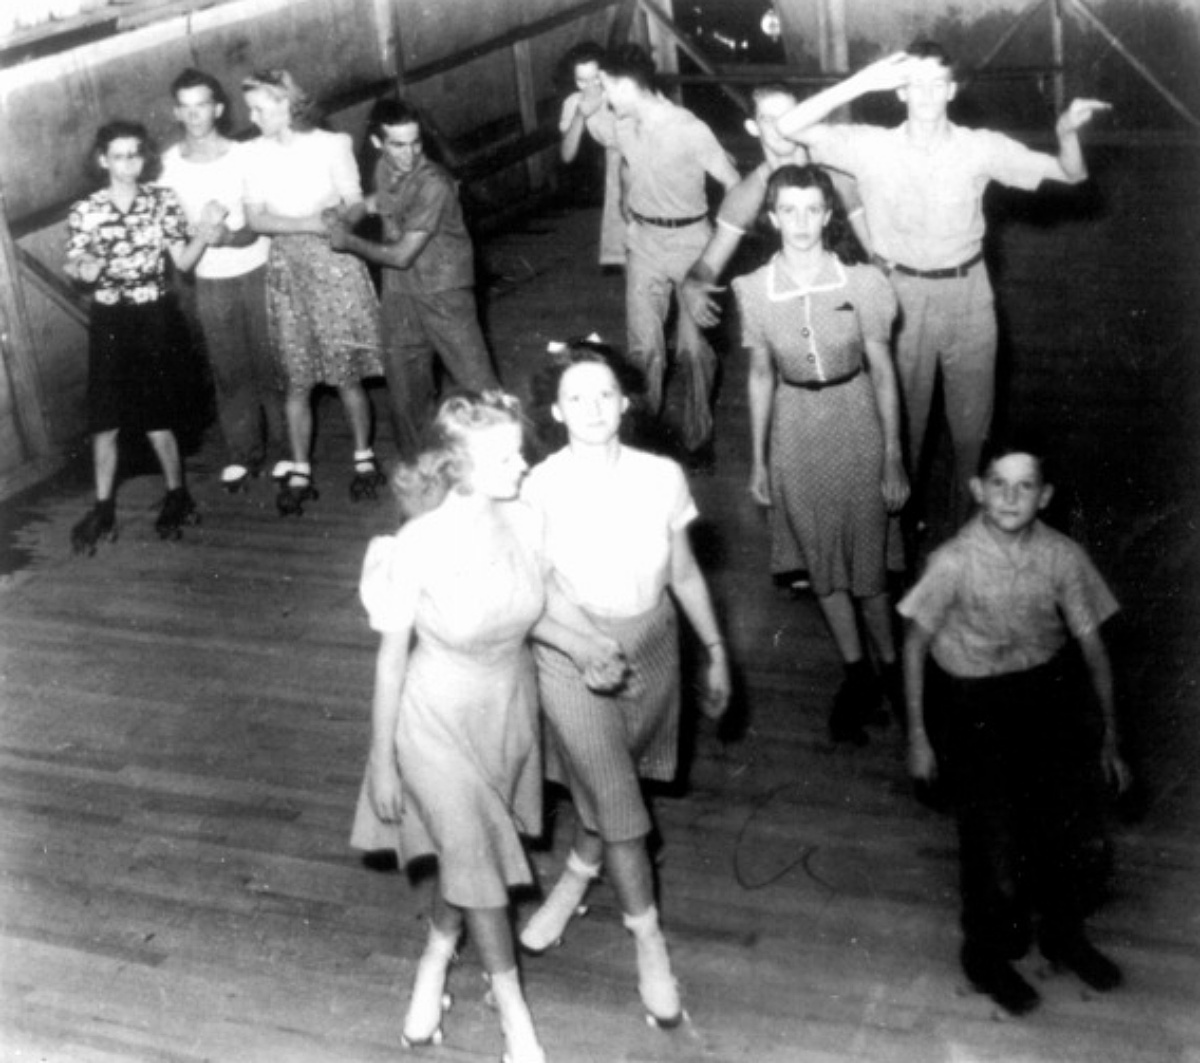 1940s roller skating indoors